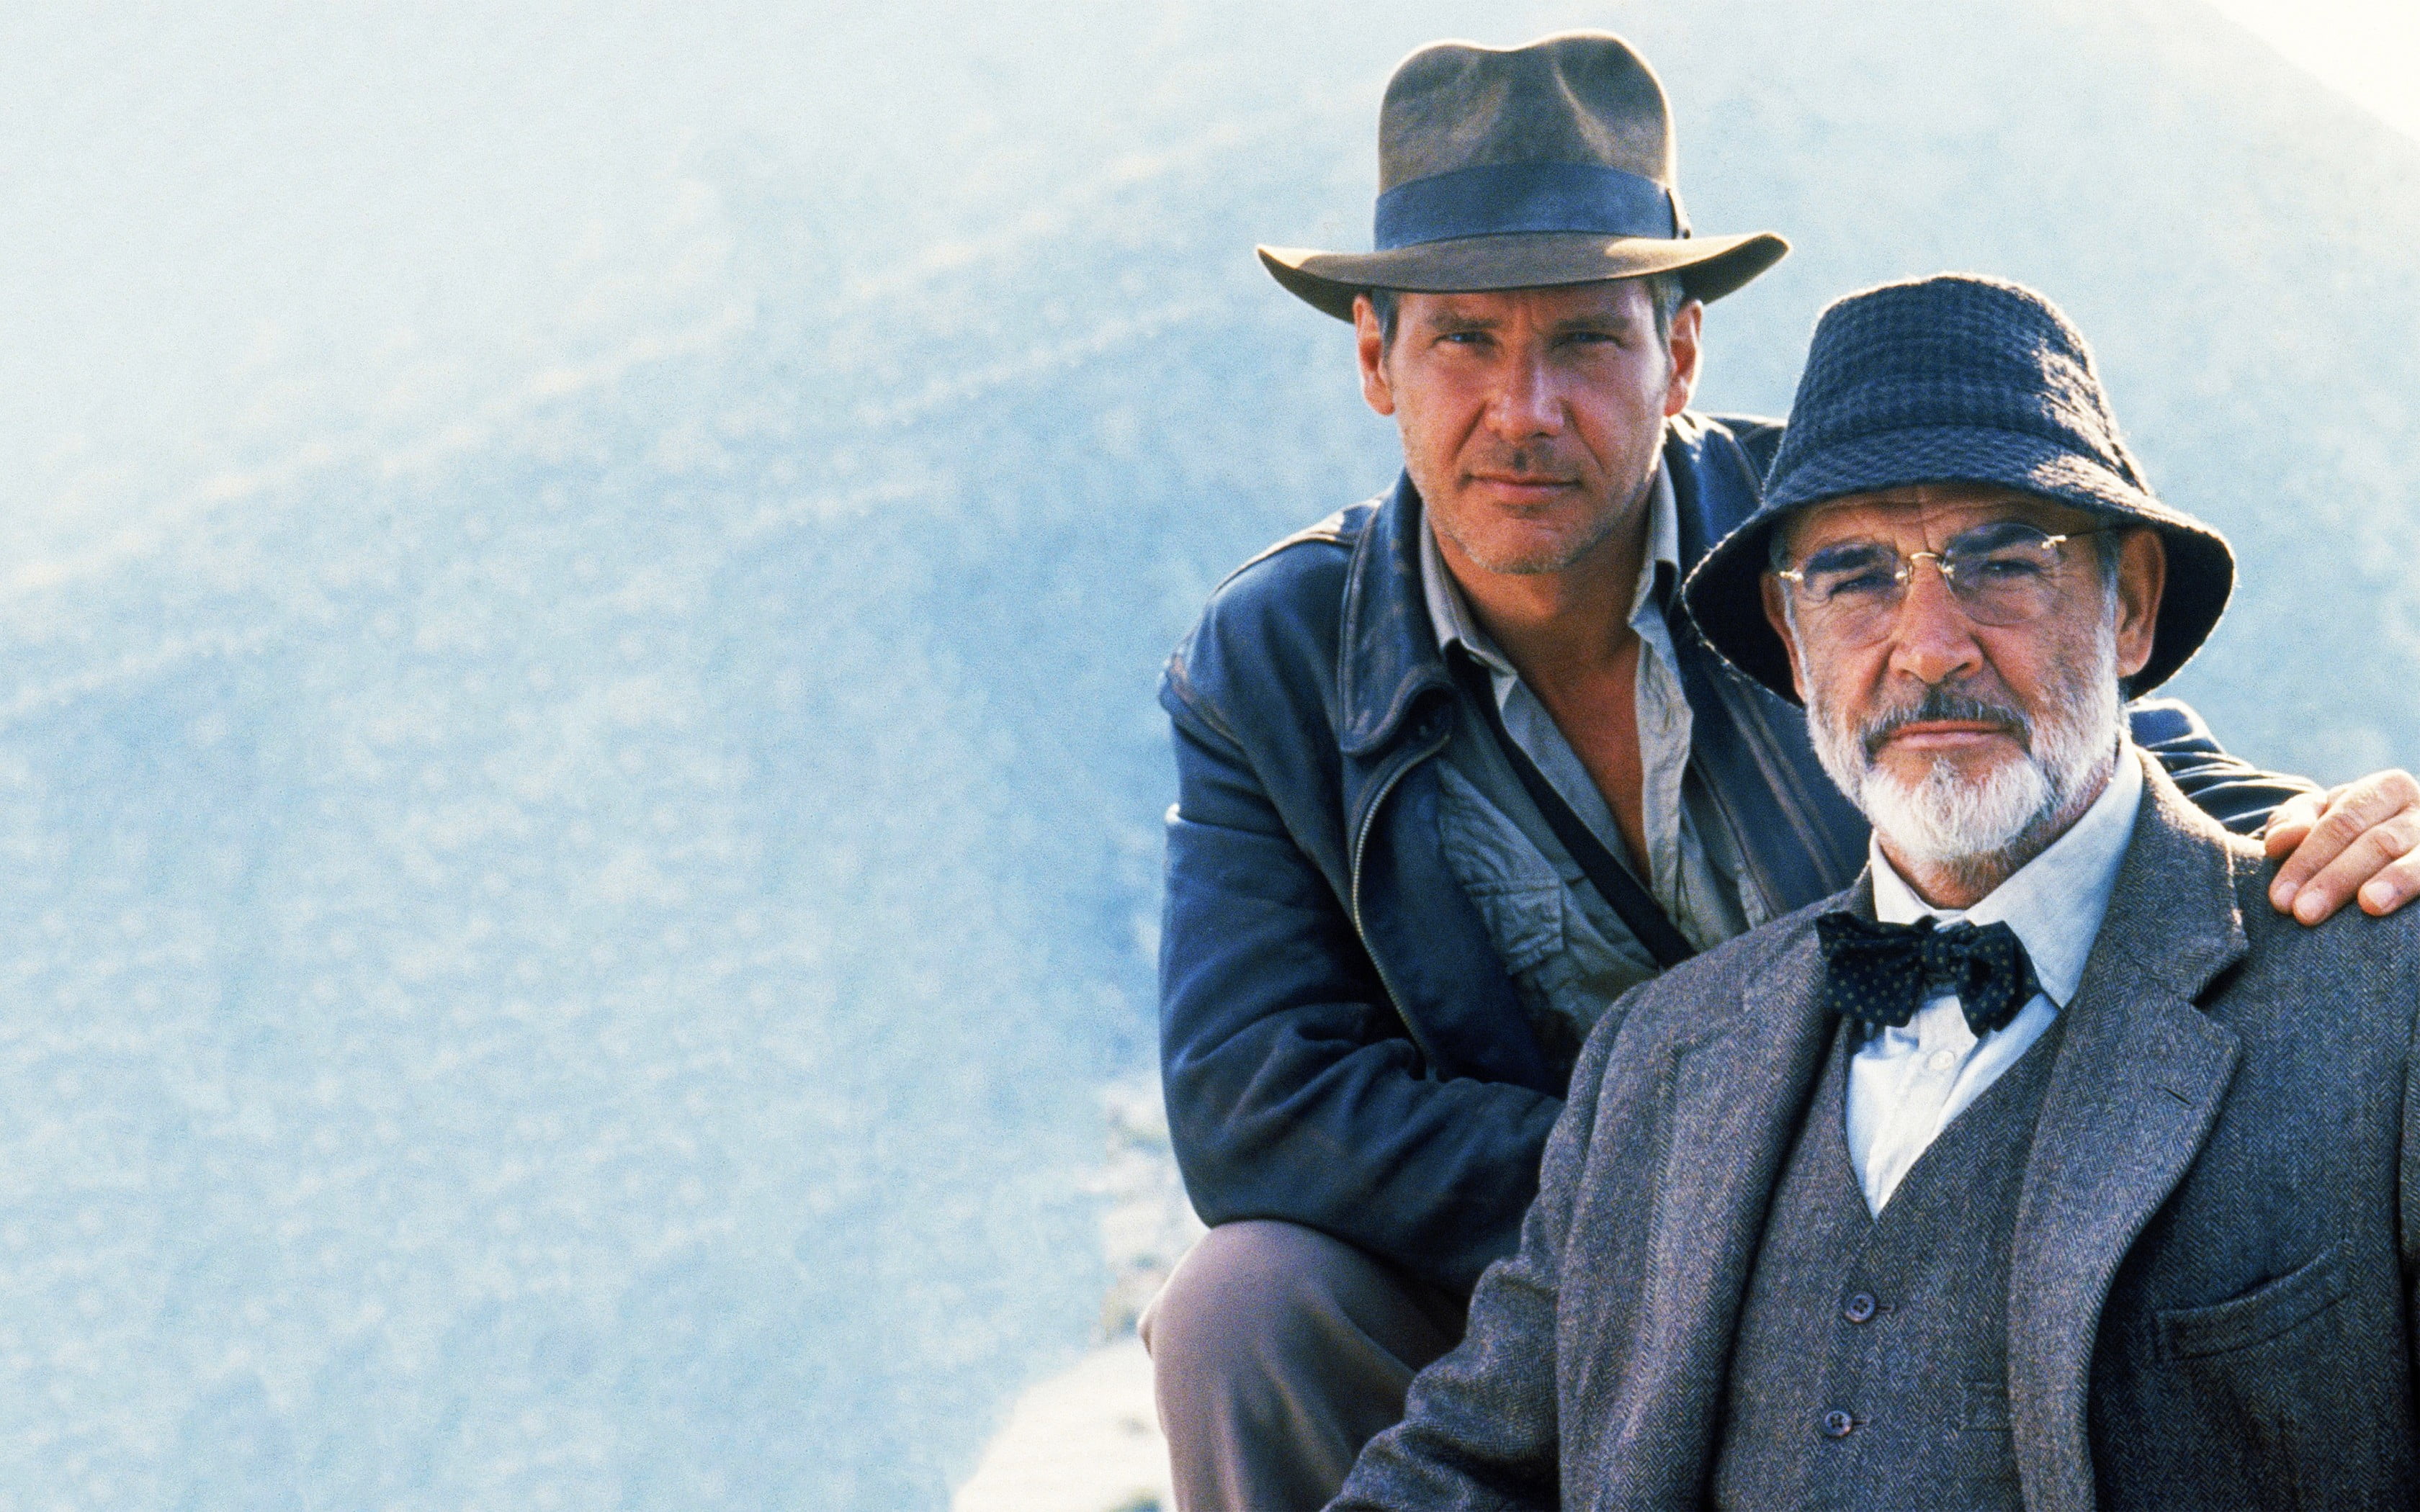 Indiana Jones movie screenshot, Indiana Jones and the Last Crusade, Harrison Ford, Sean Connery, movies